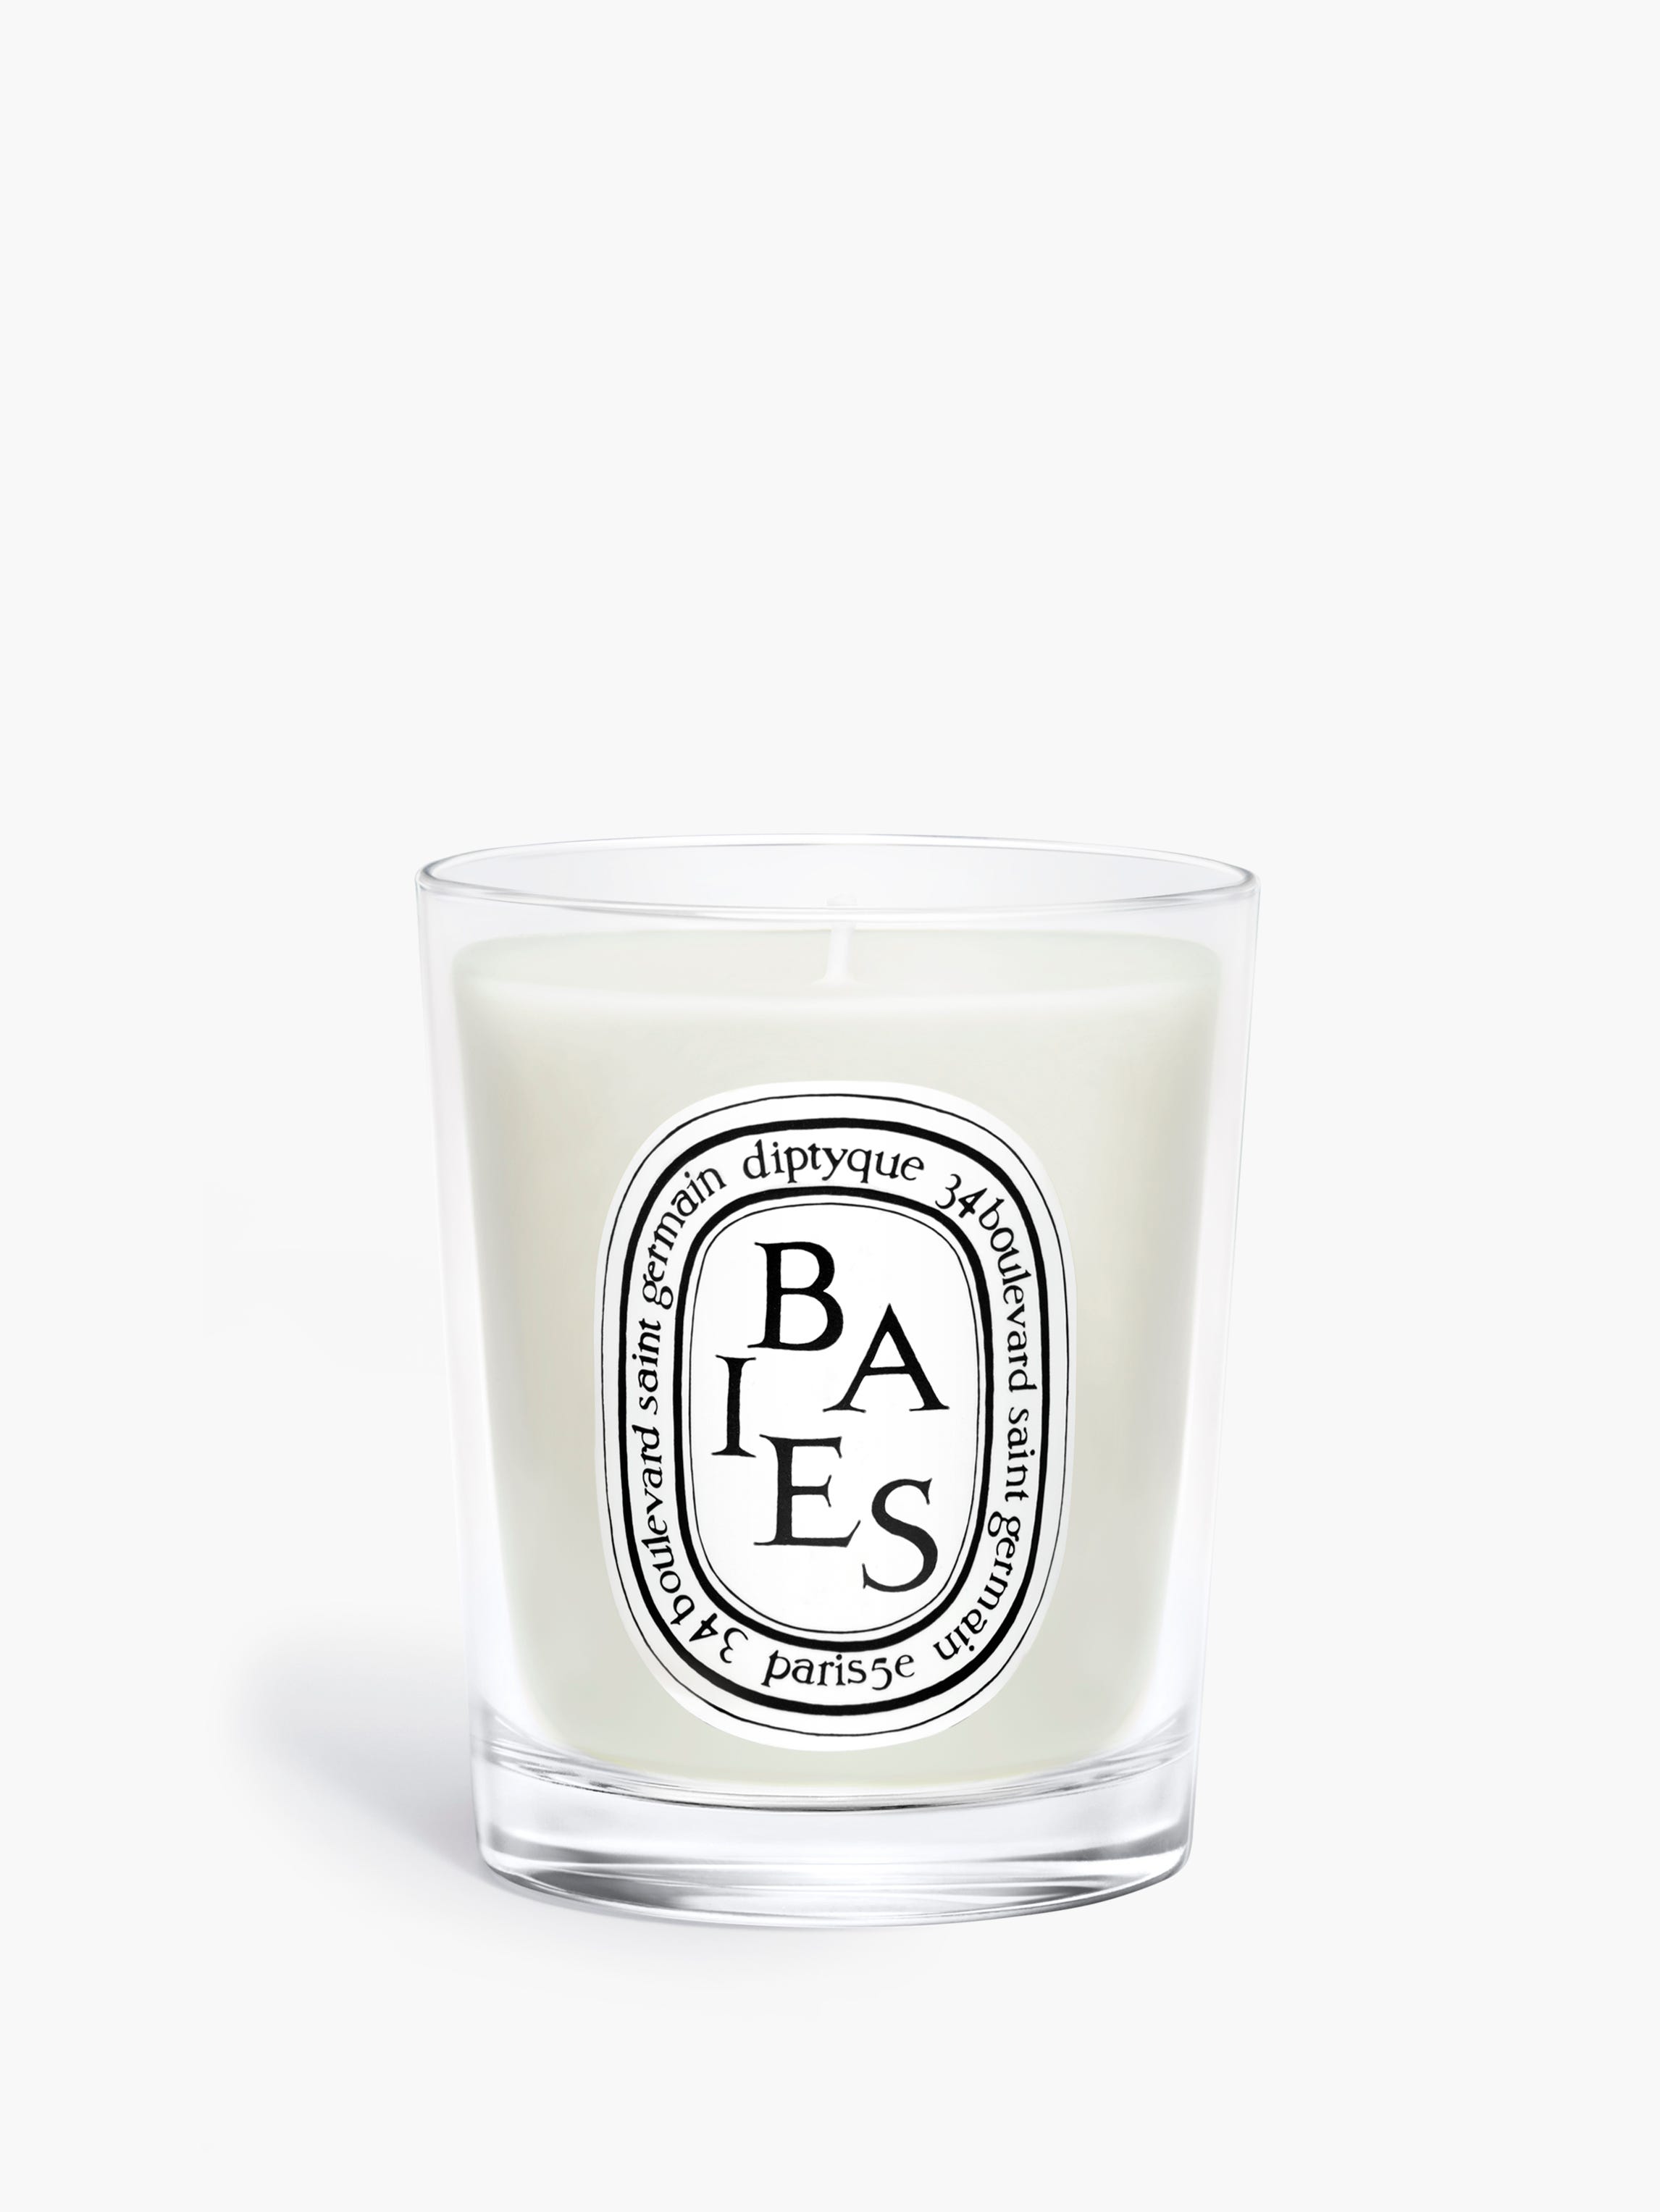 Baies (Berries) - Classic Candle Classic | Diptyque Paris